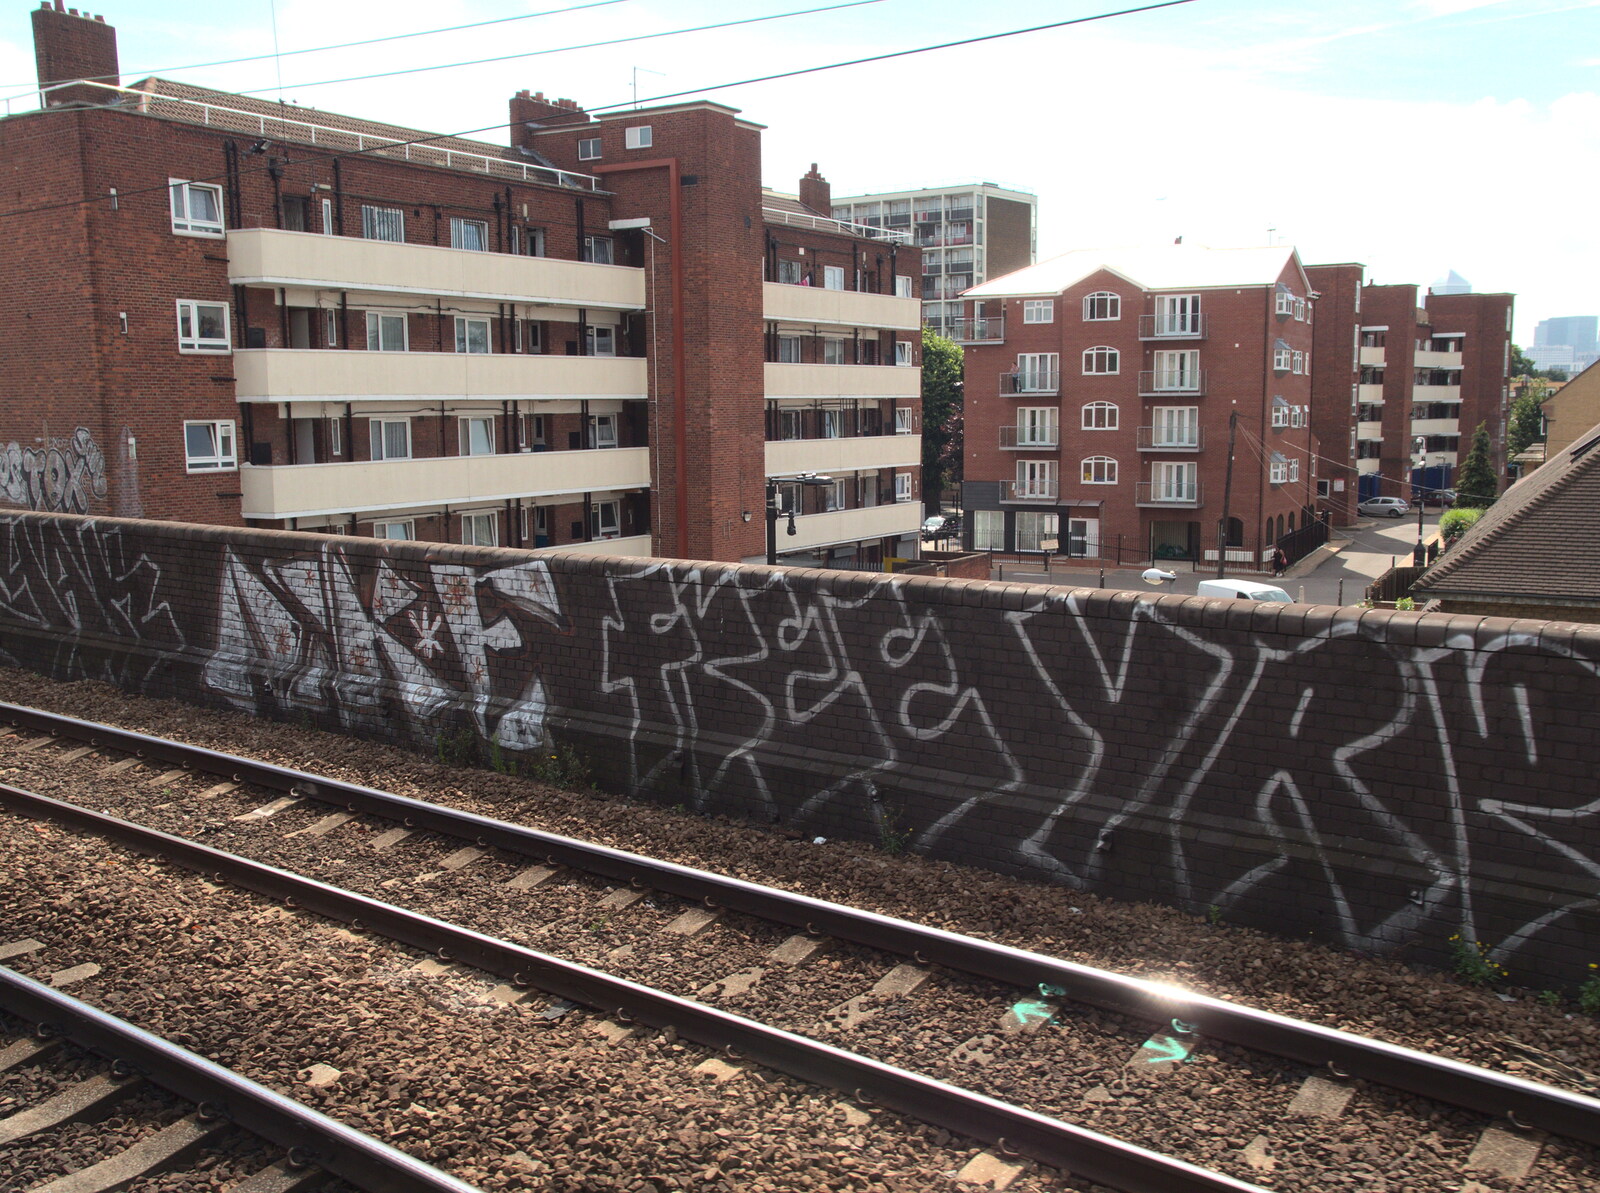 Graffiti on a railway bridge from A Trip to Pizza Pub, Great Suffolk Street, Southwark - 8th July 2014